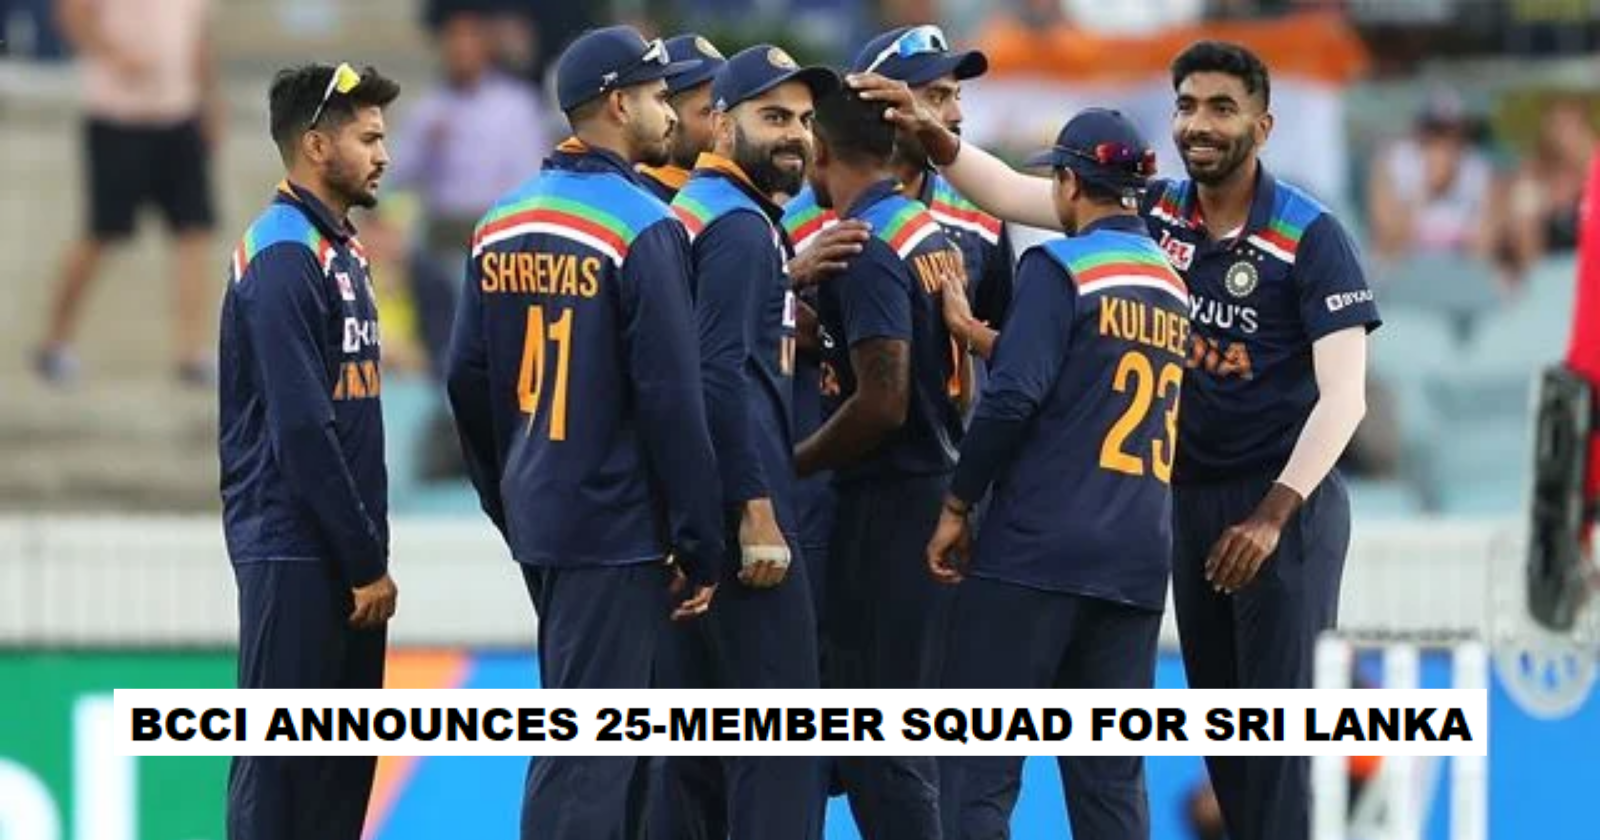 India's Squad For Sri Lanka Announced, Shikhar Dhawan To Captain The Side